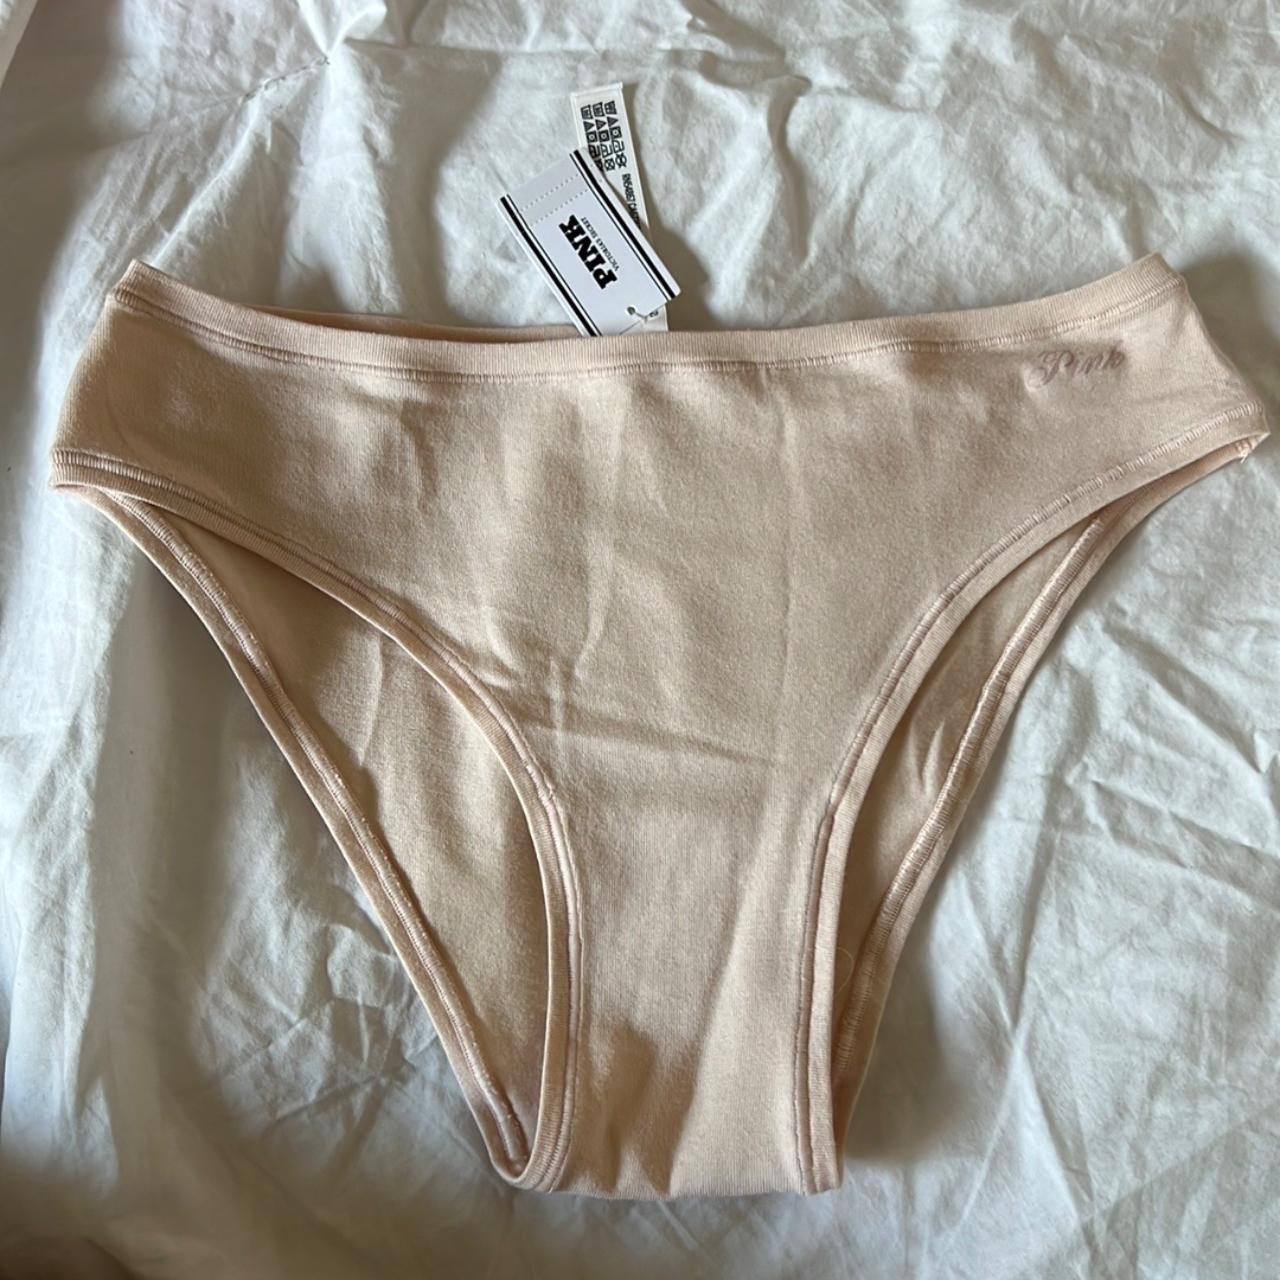 Victoria's Secret Pink Cotton Cheekster Panty Underwear 2 PACK - Size Small